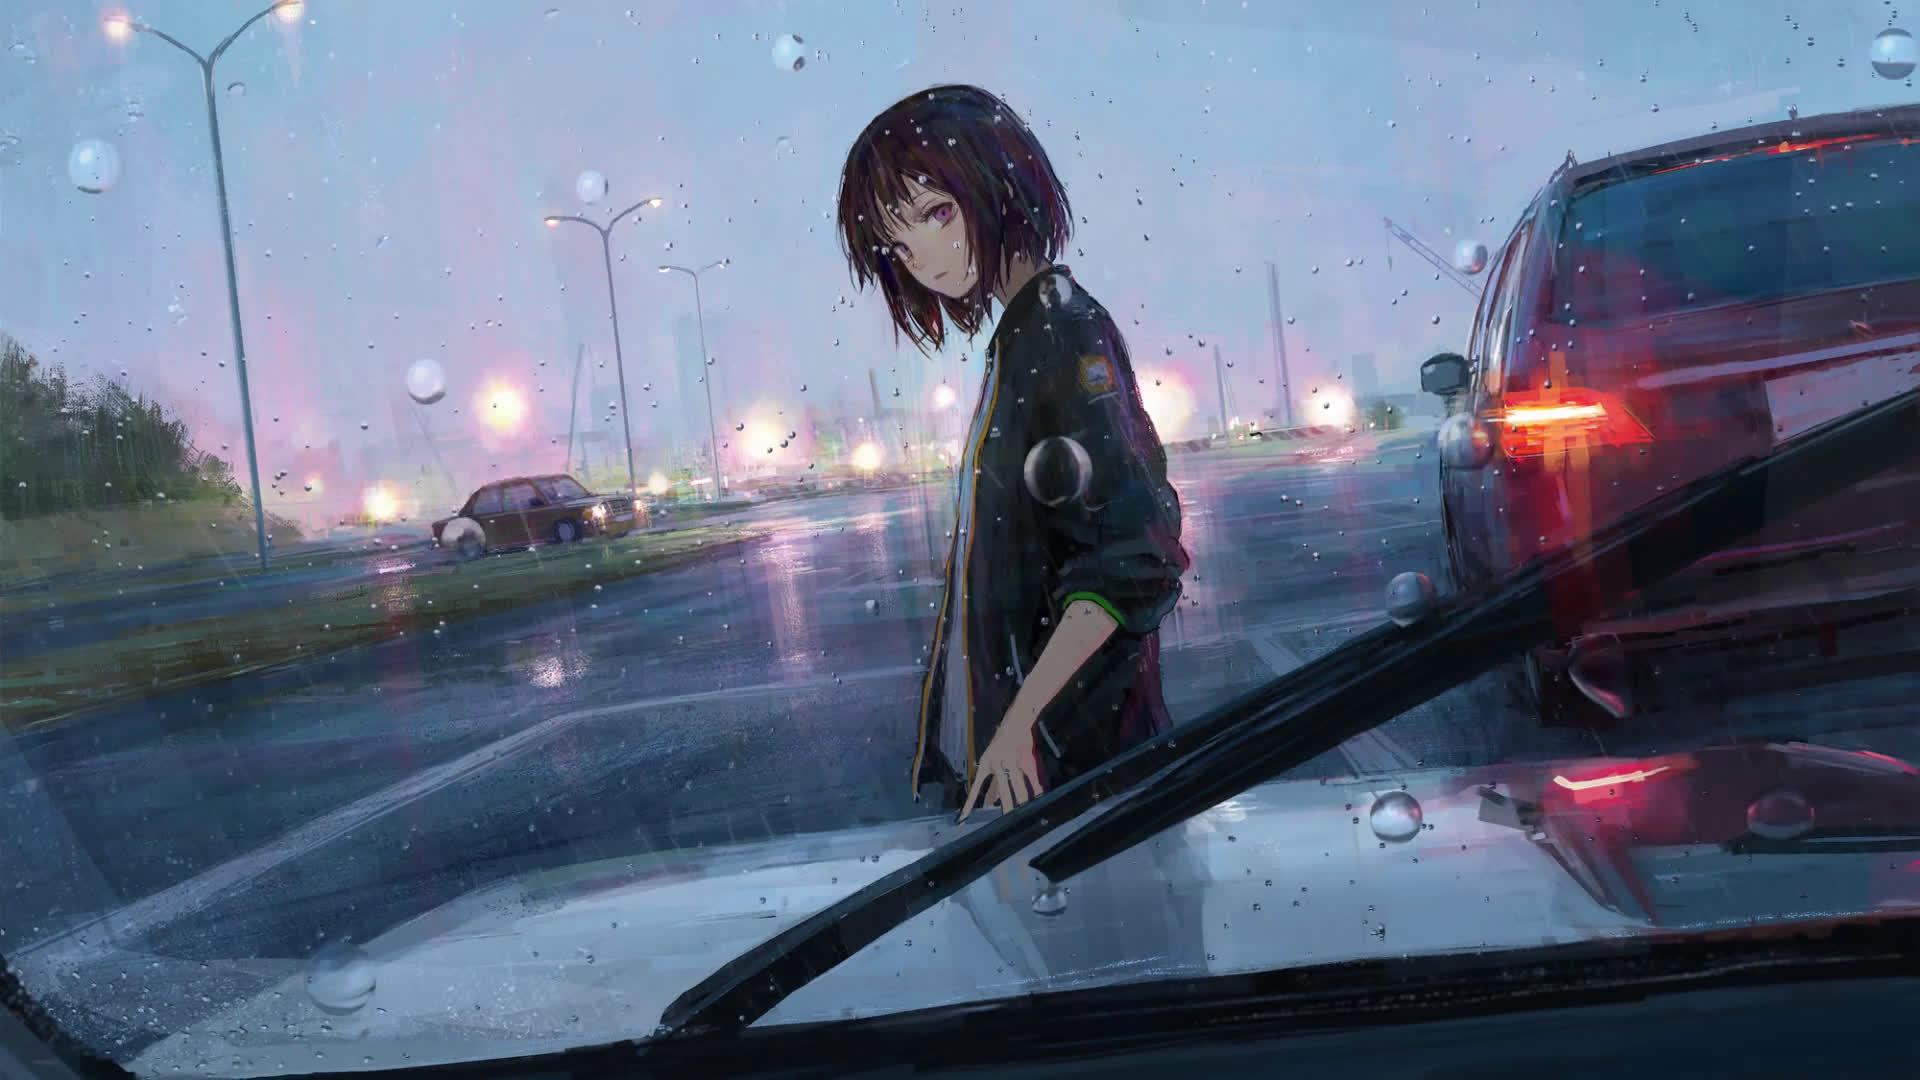 100+] Anime Rain Background s | Wallpapers.com